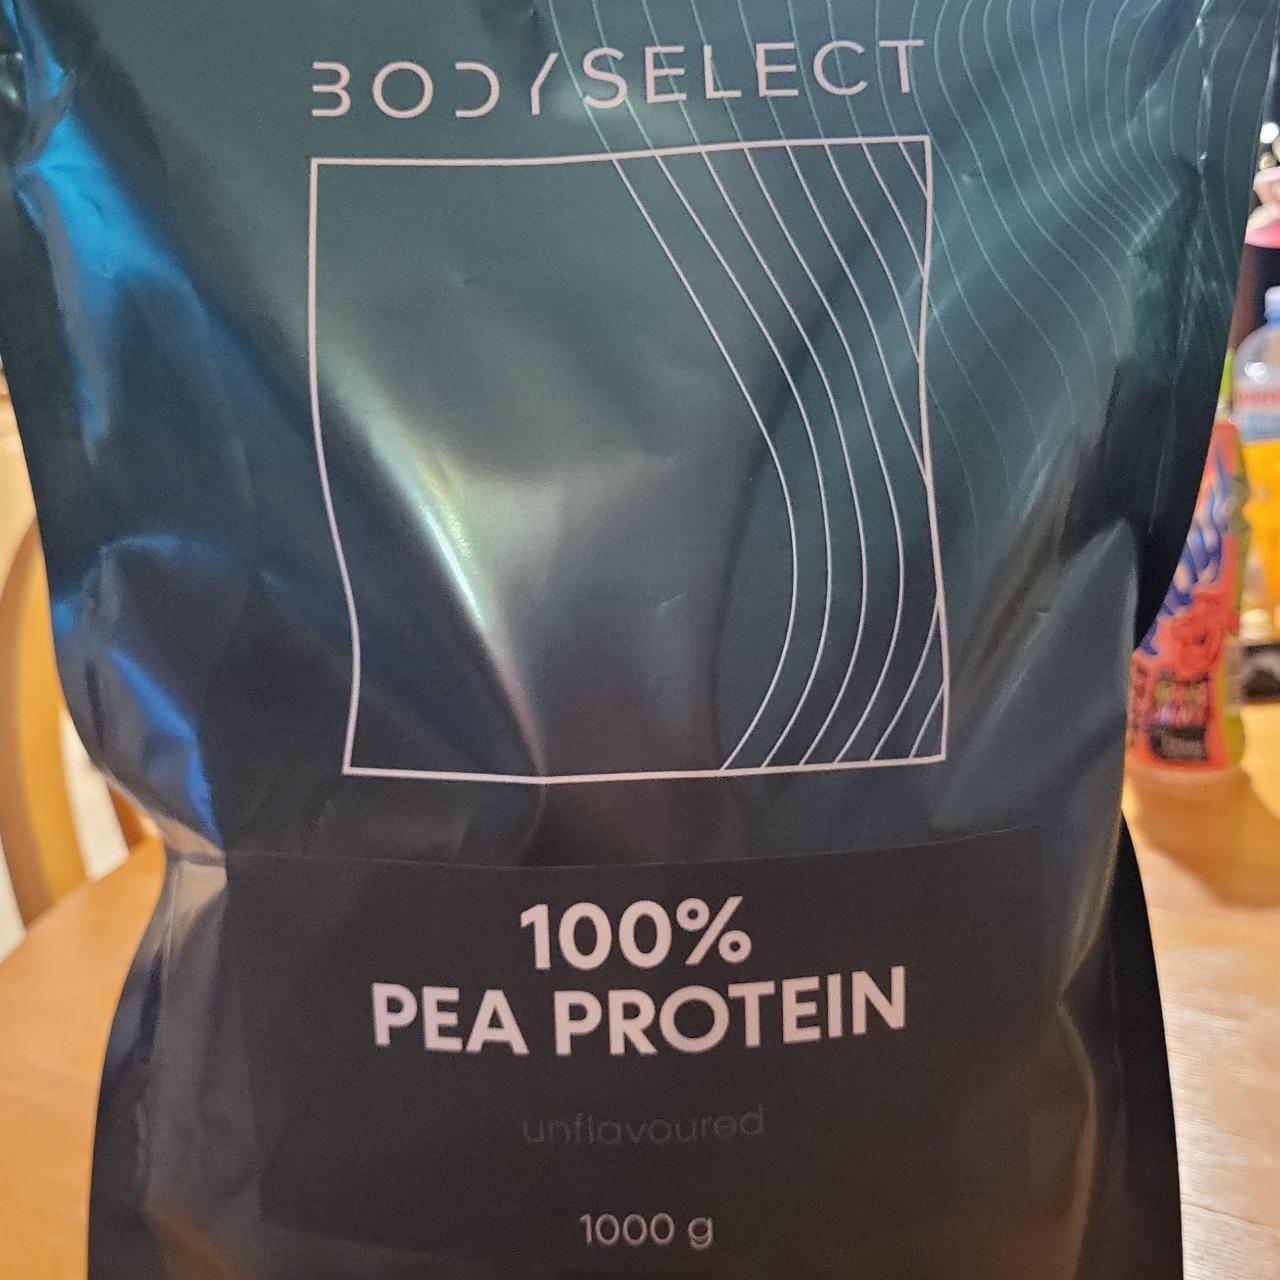 Képek - 100% pea protein Body Select